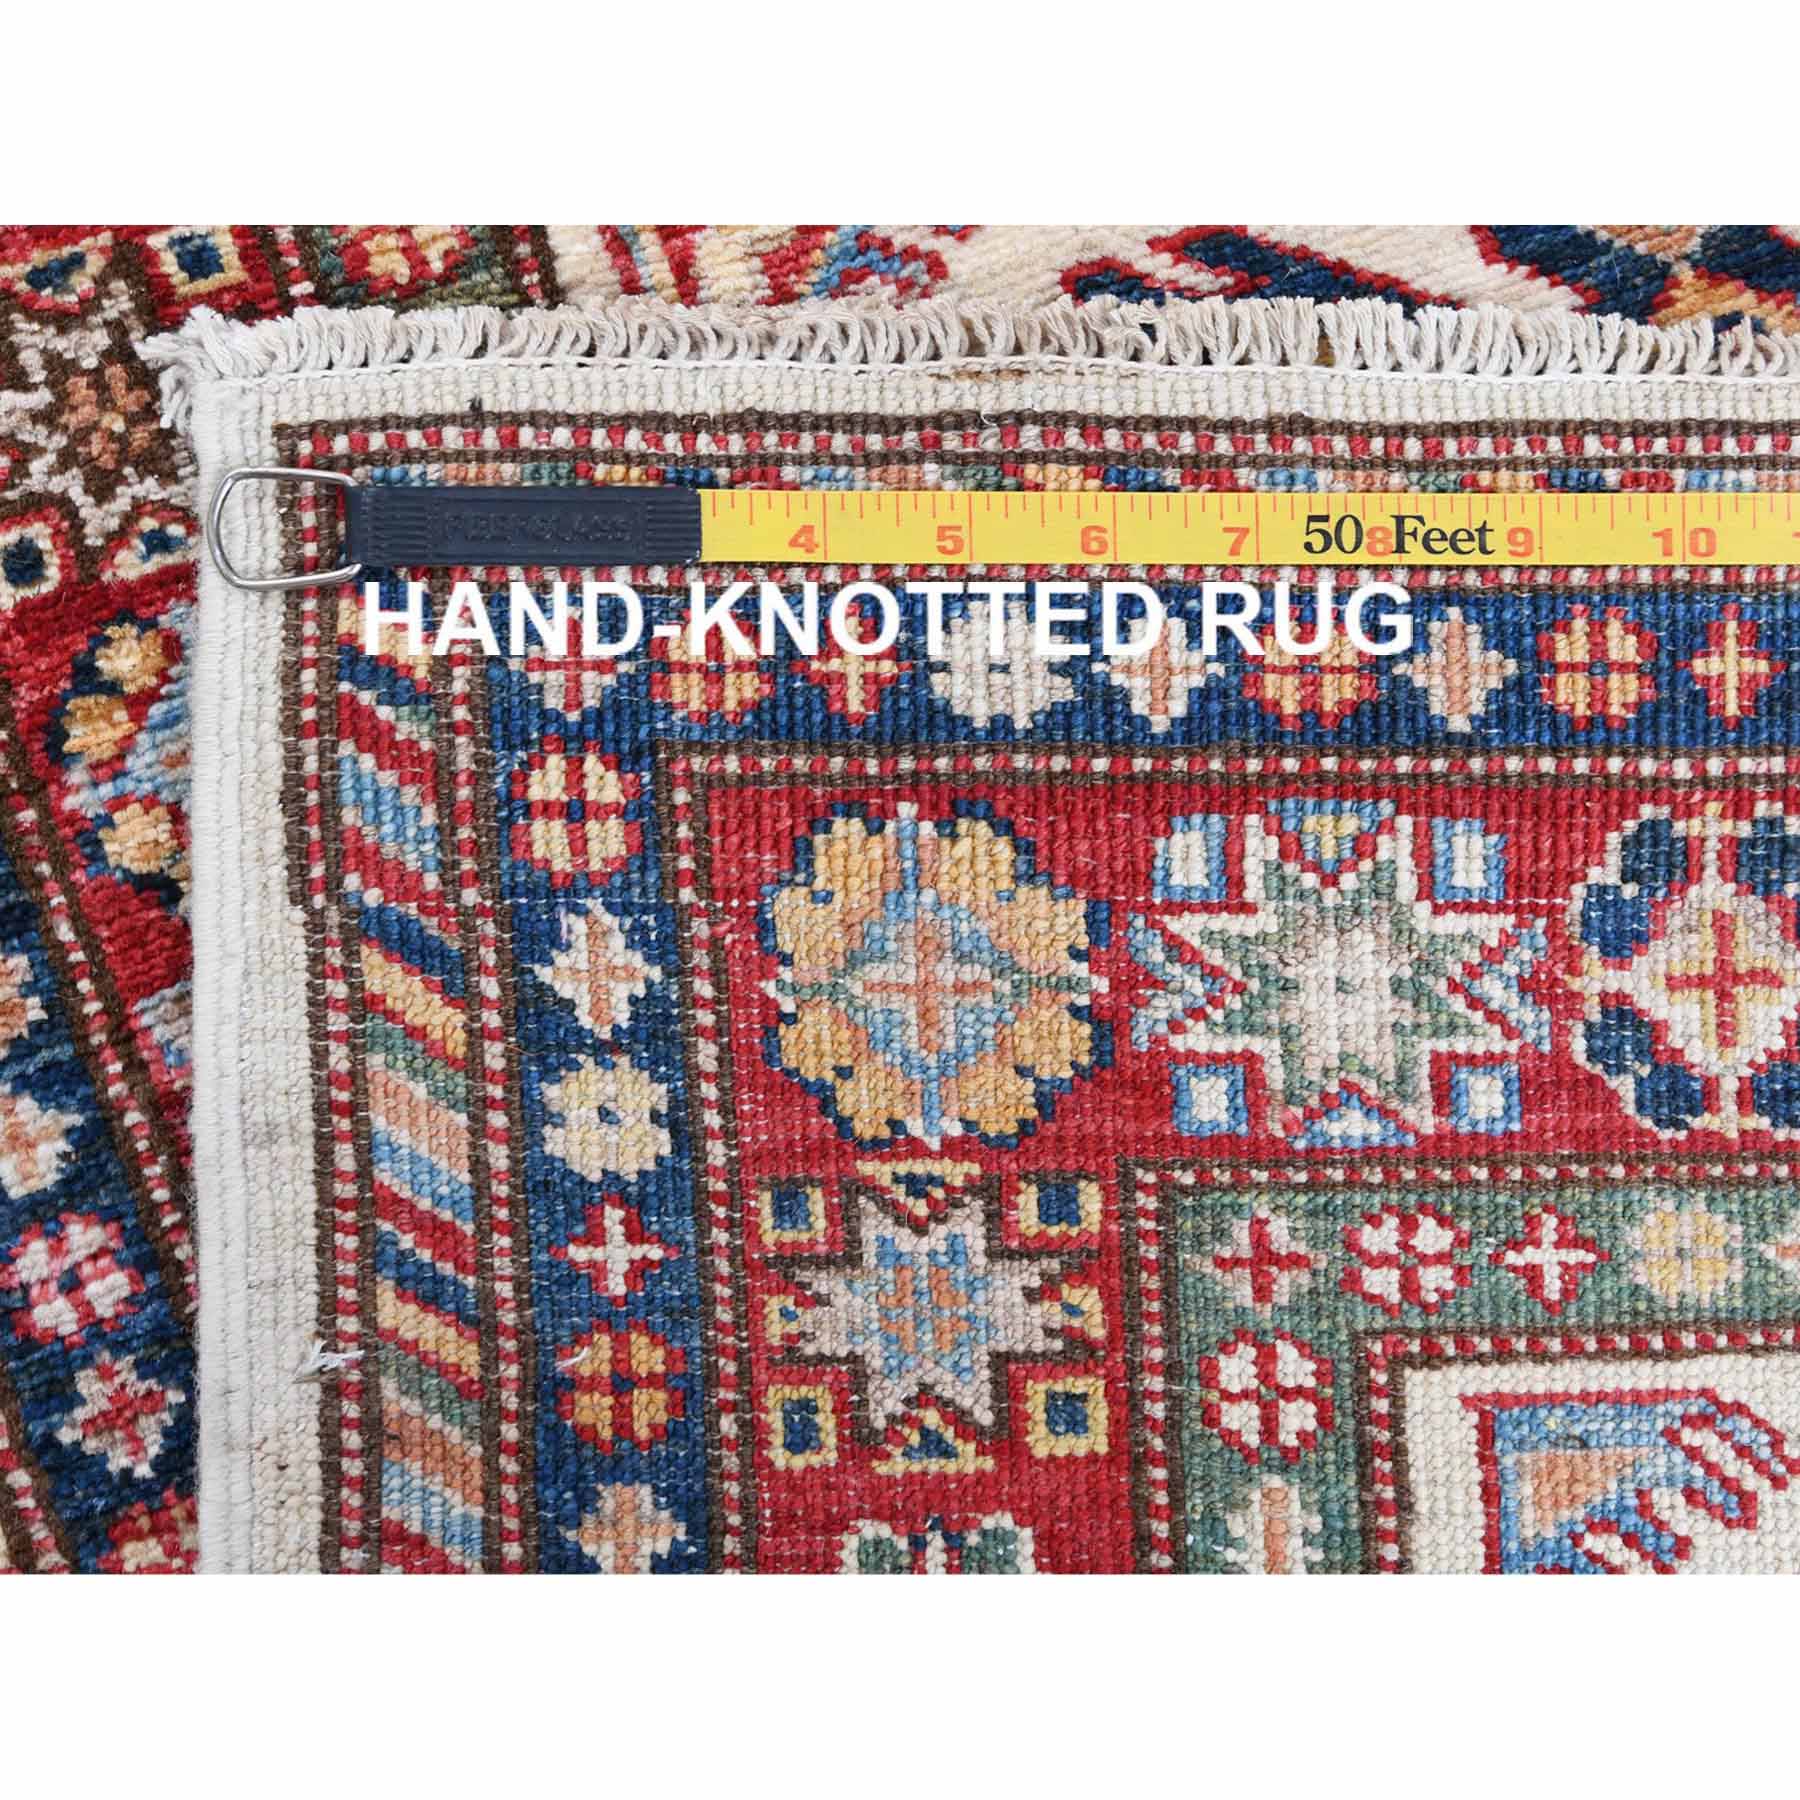 Kazak-Hand-Knotted-Rug-307250